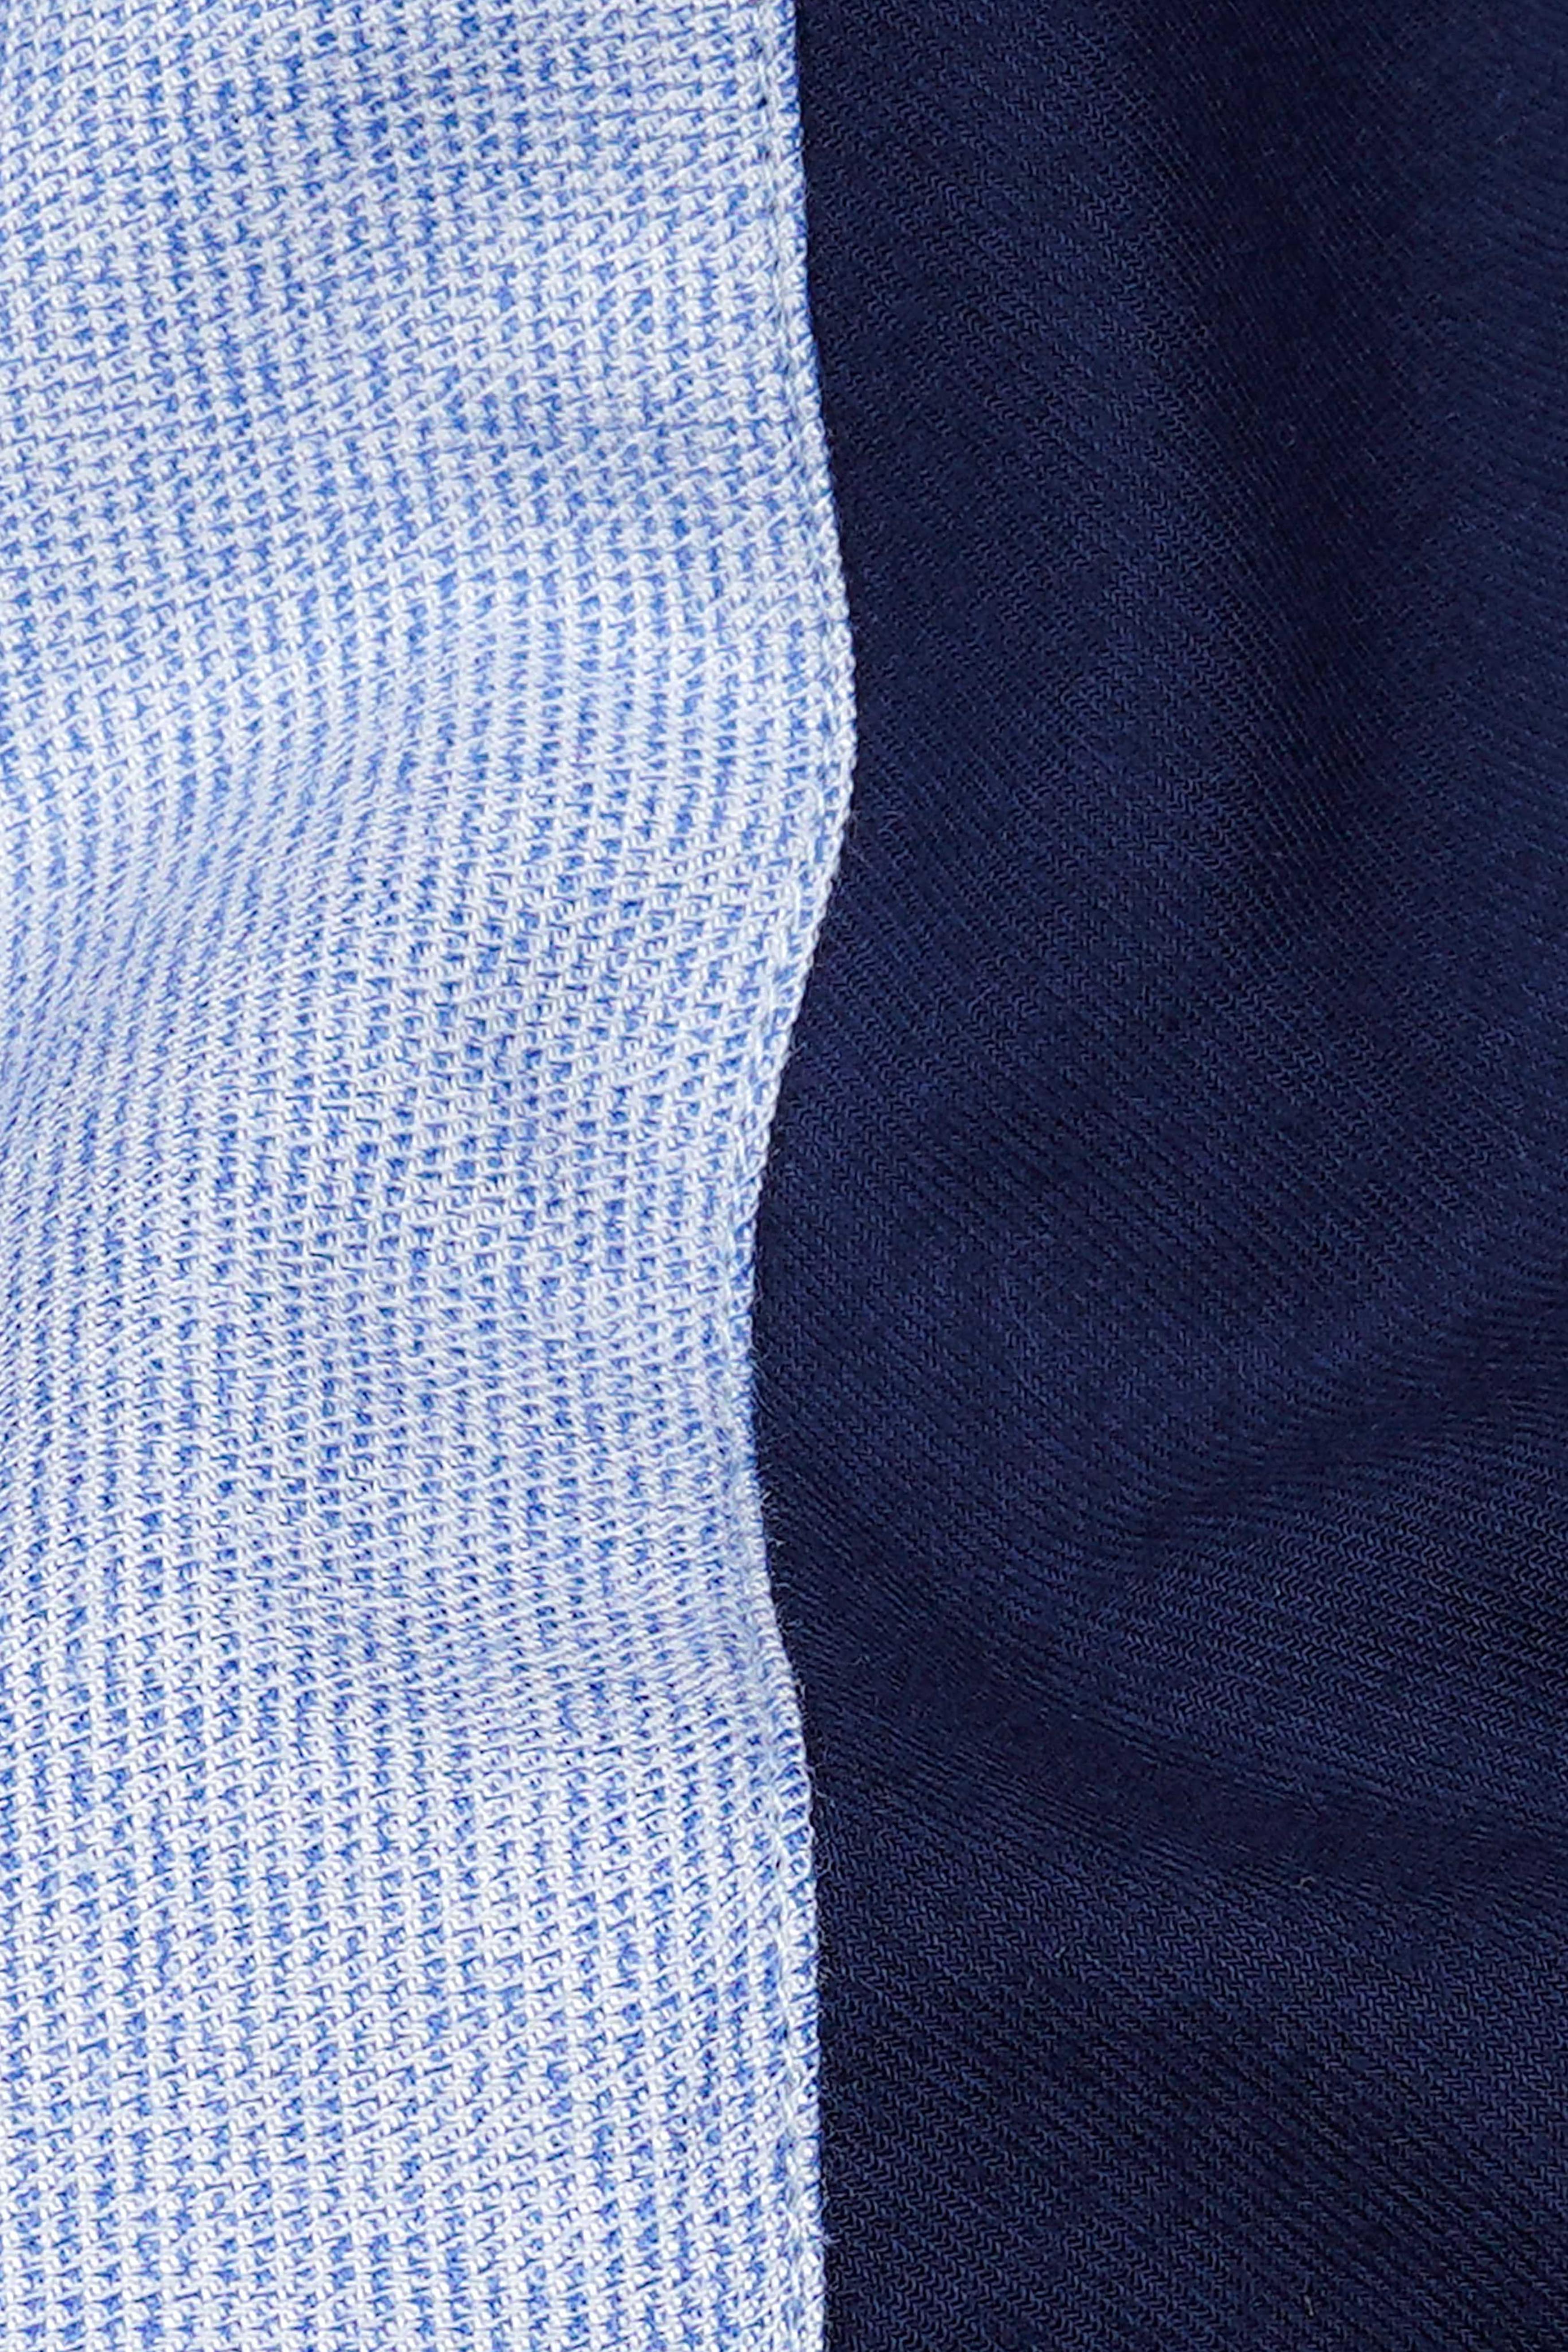 Cadet Blue with Midnight Navy Blue Tiger Printed Twill Premium Cotton Designer Shirt